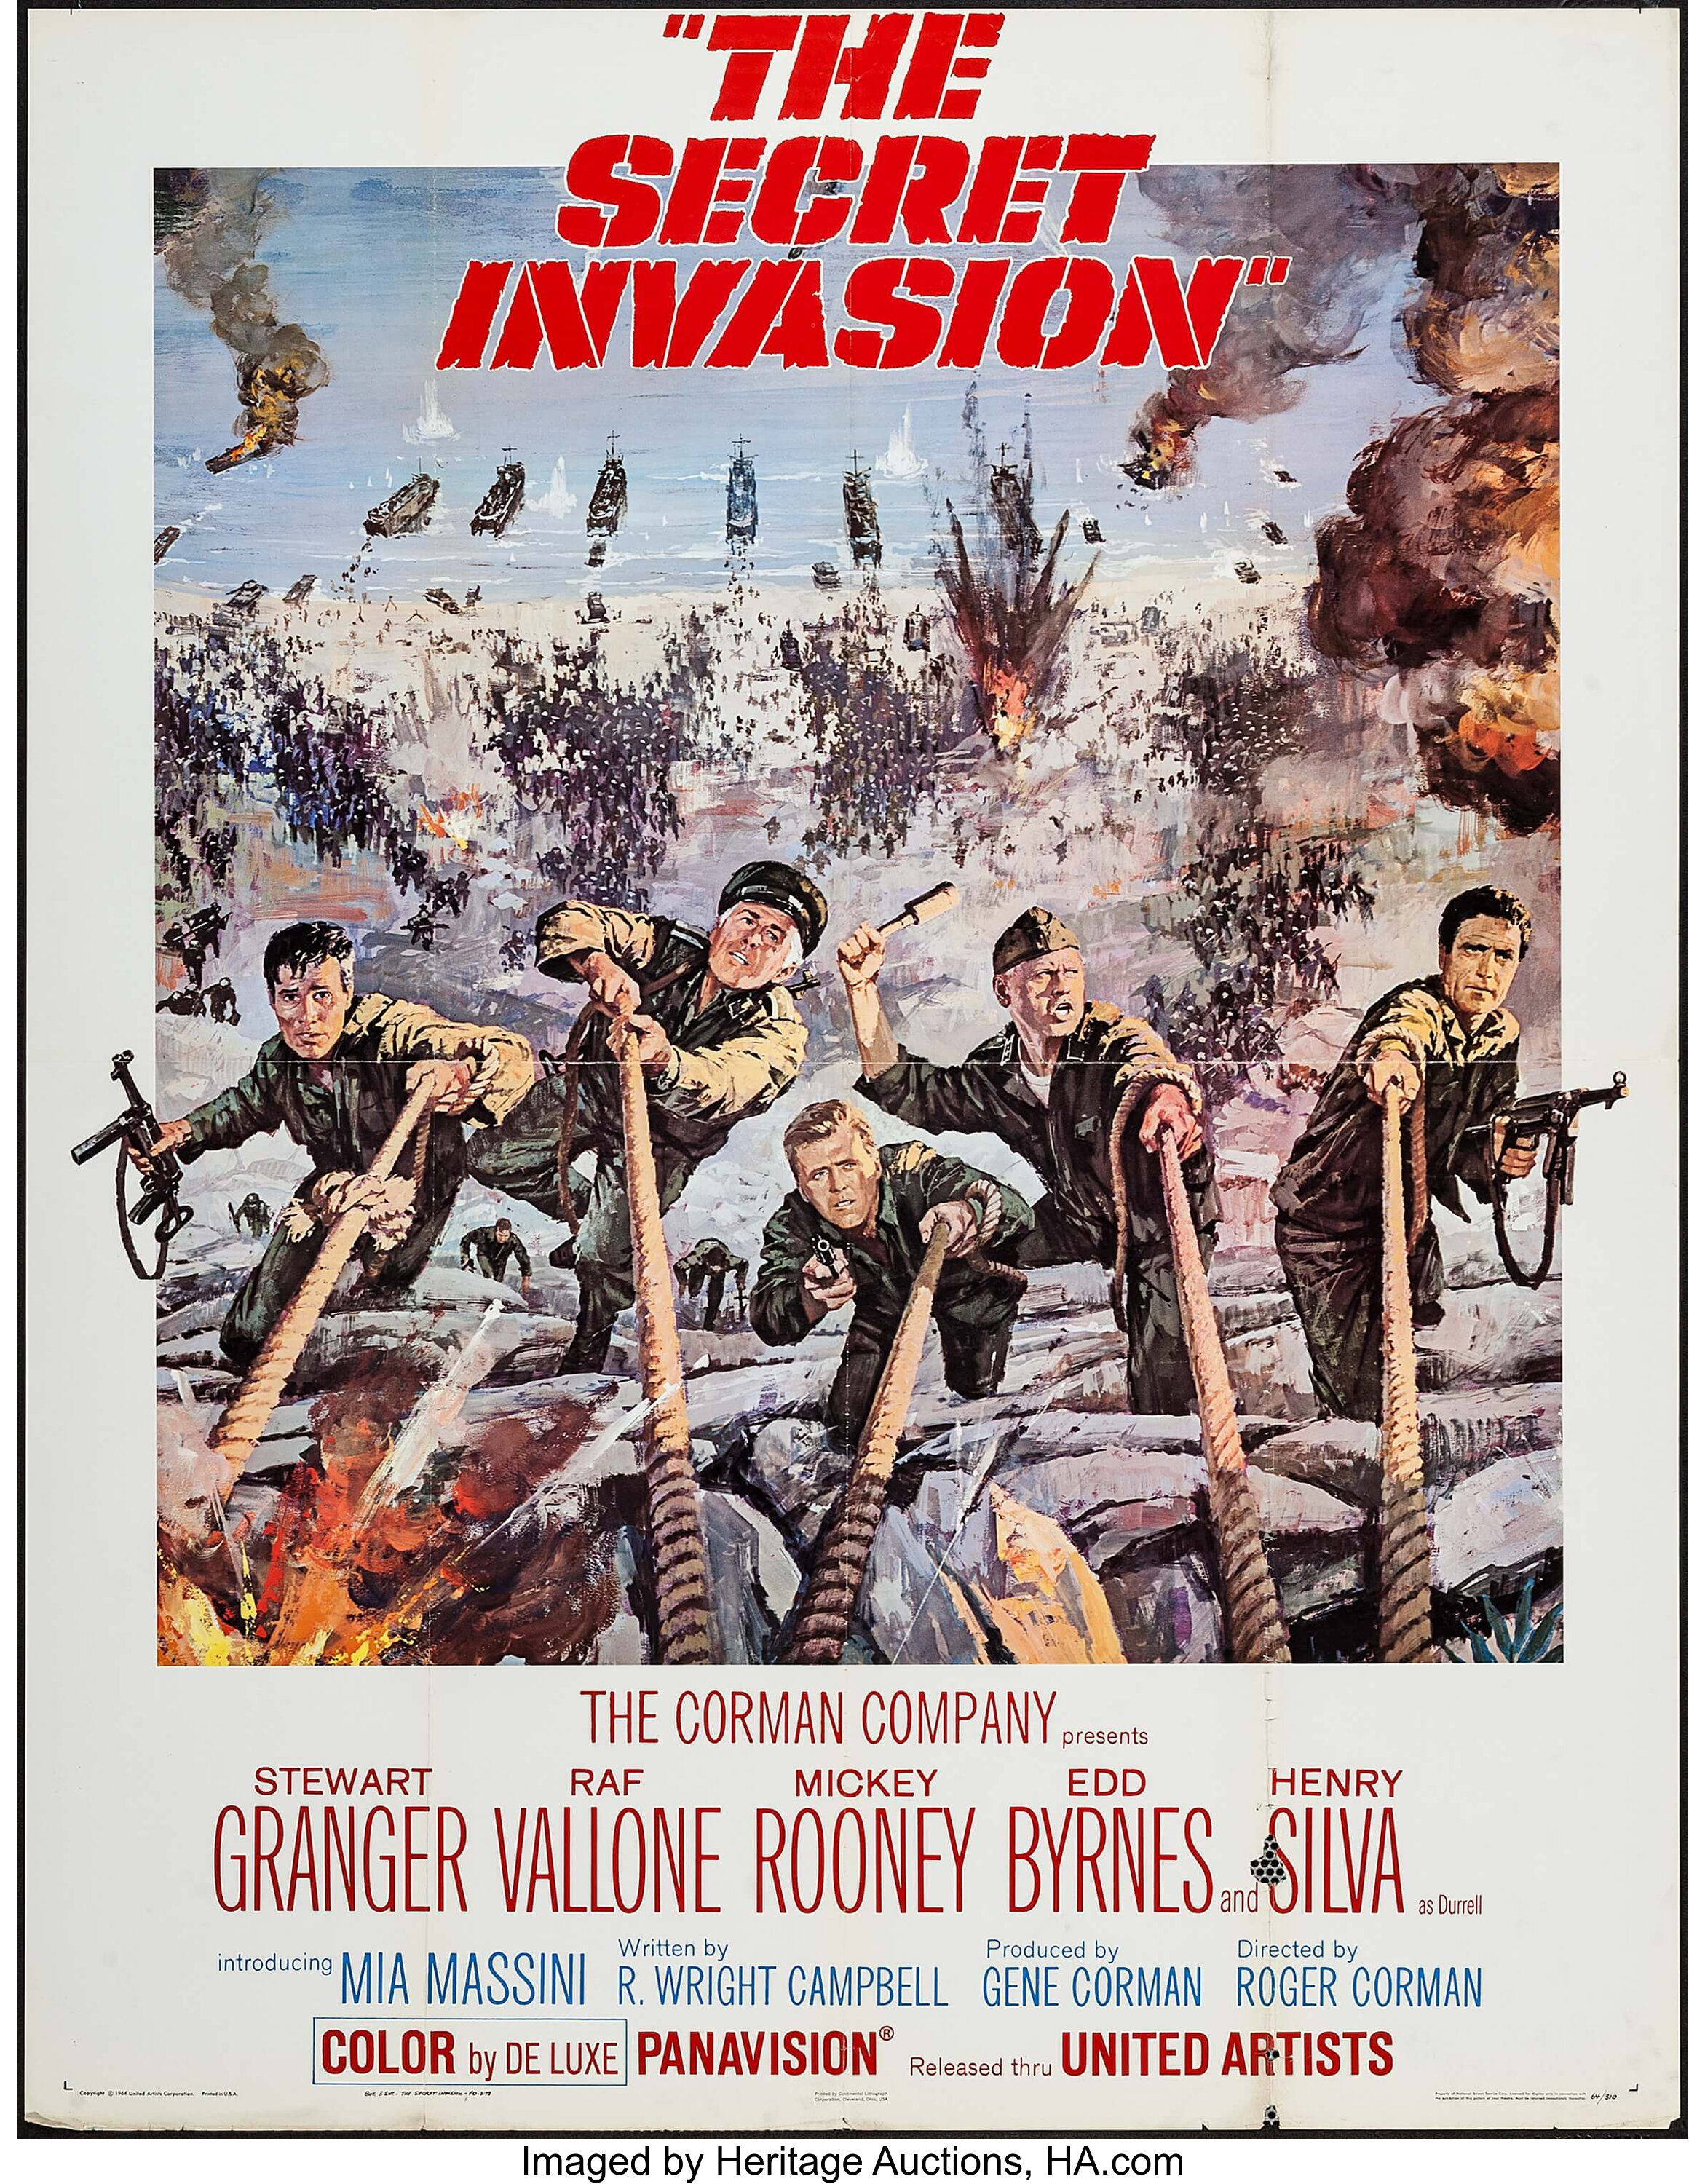 Poster Posse x Secret Invasion